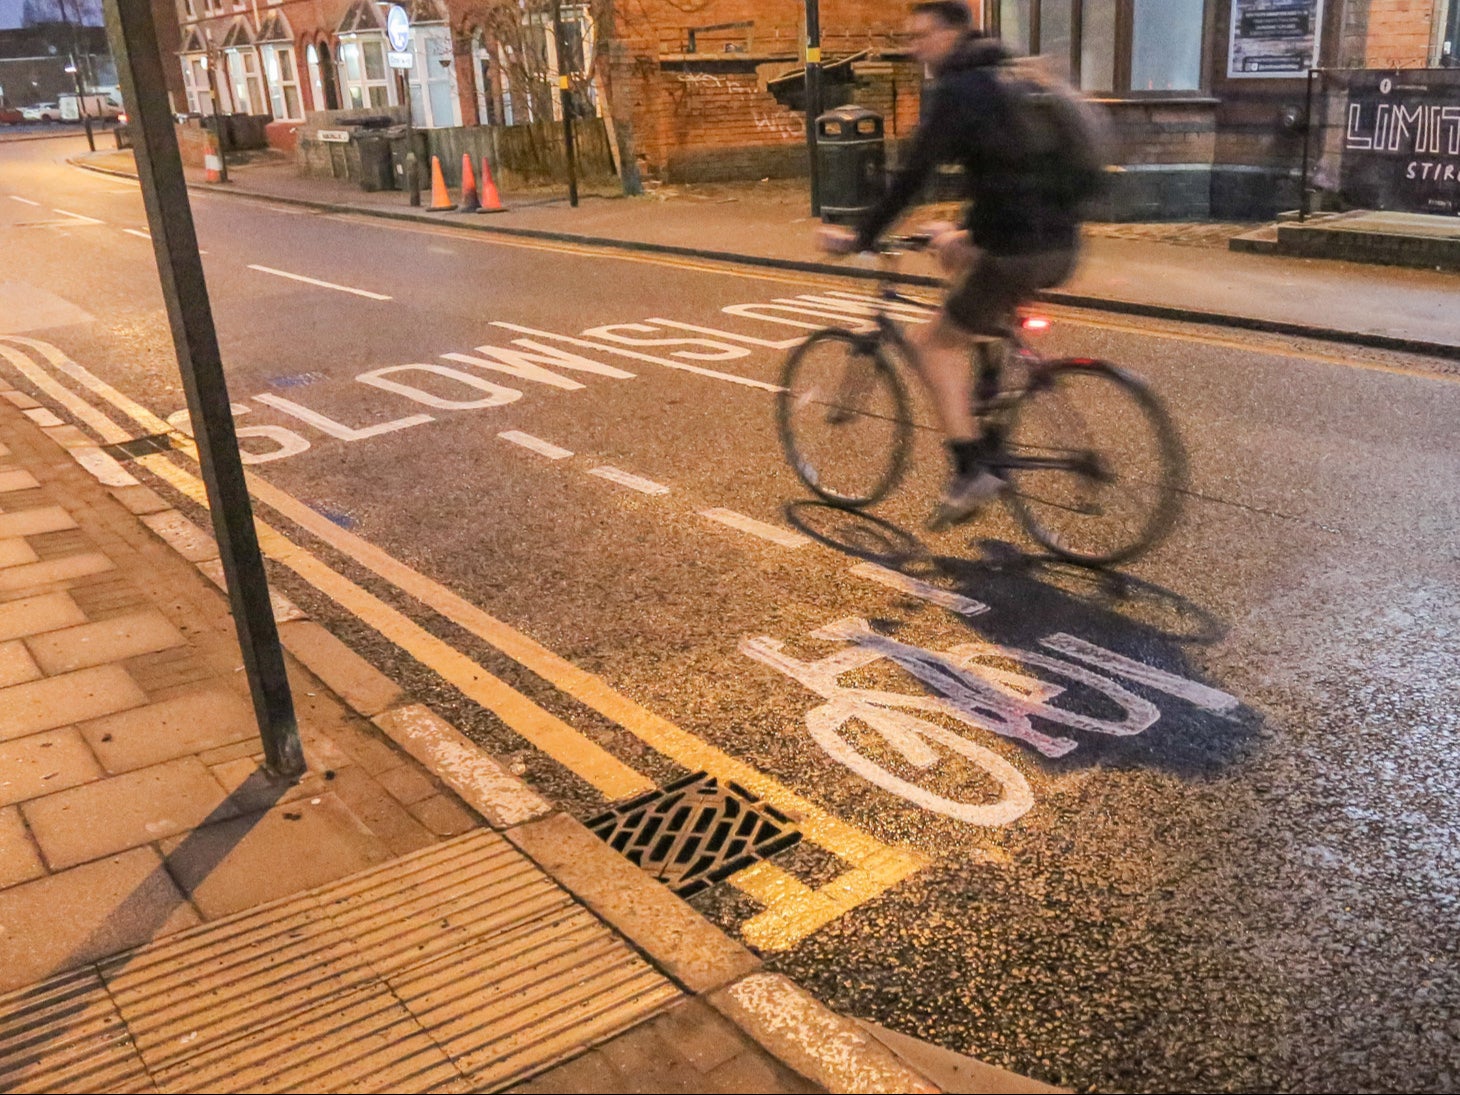 The bike lane measures around 7ft long